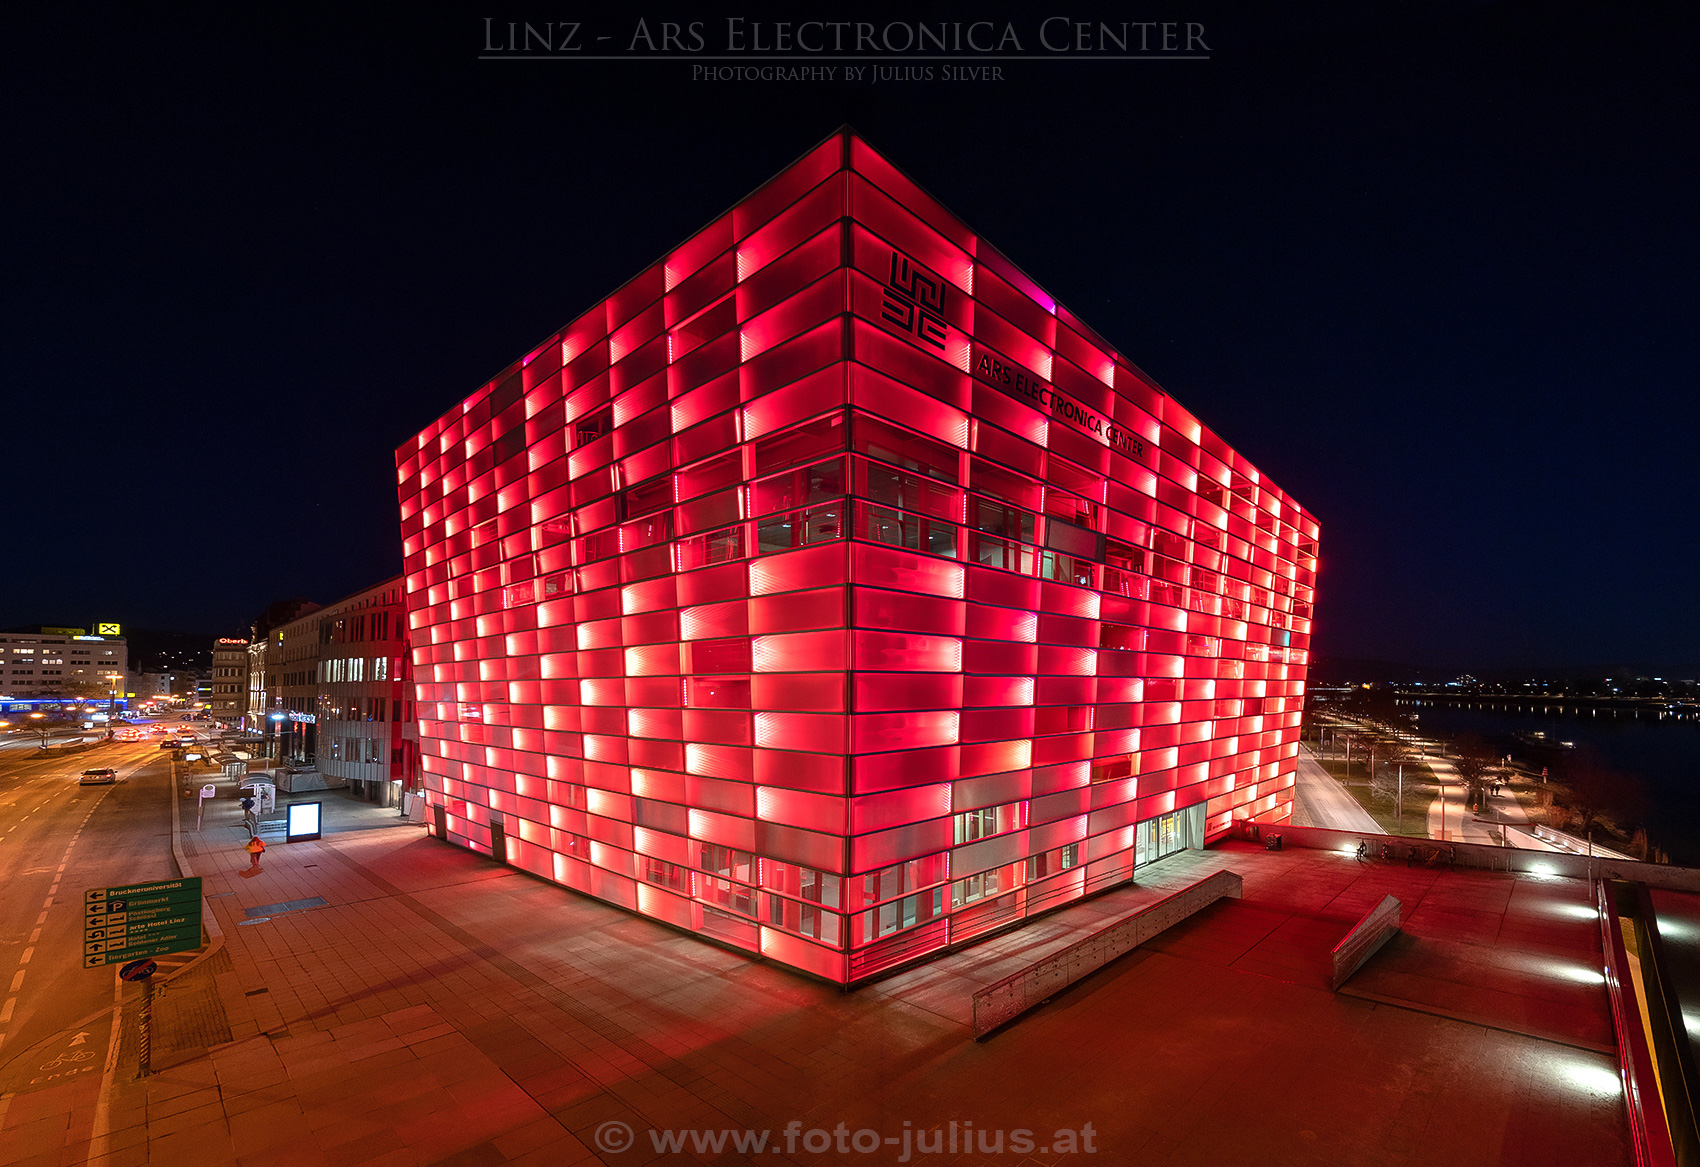 Linz_107a_Ars_Electronica_Center.jpg, 767kB